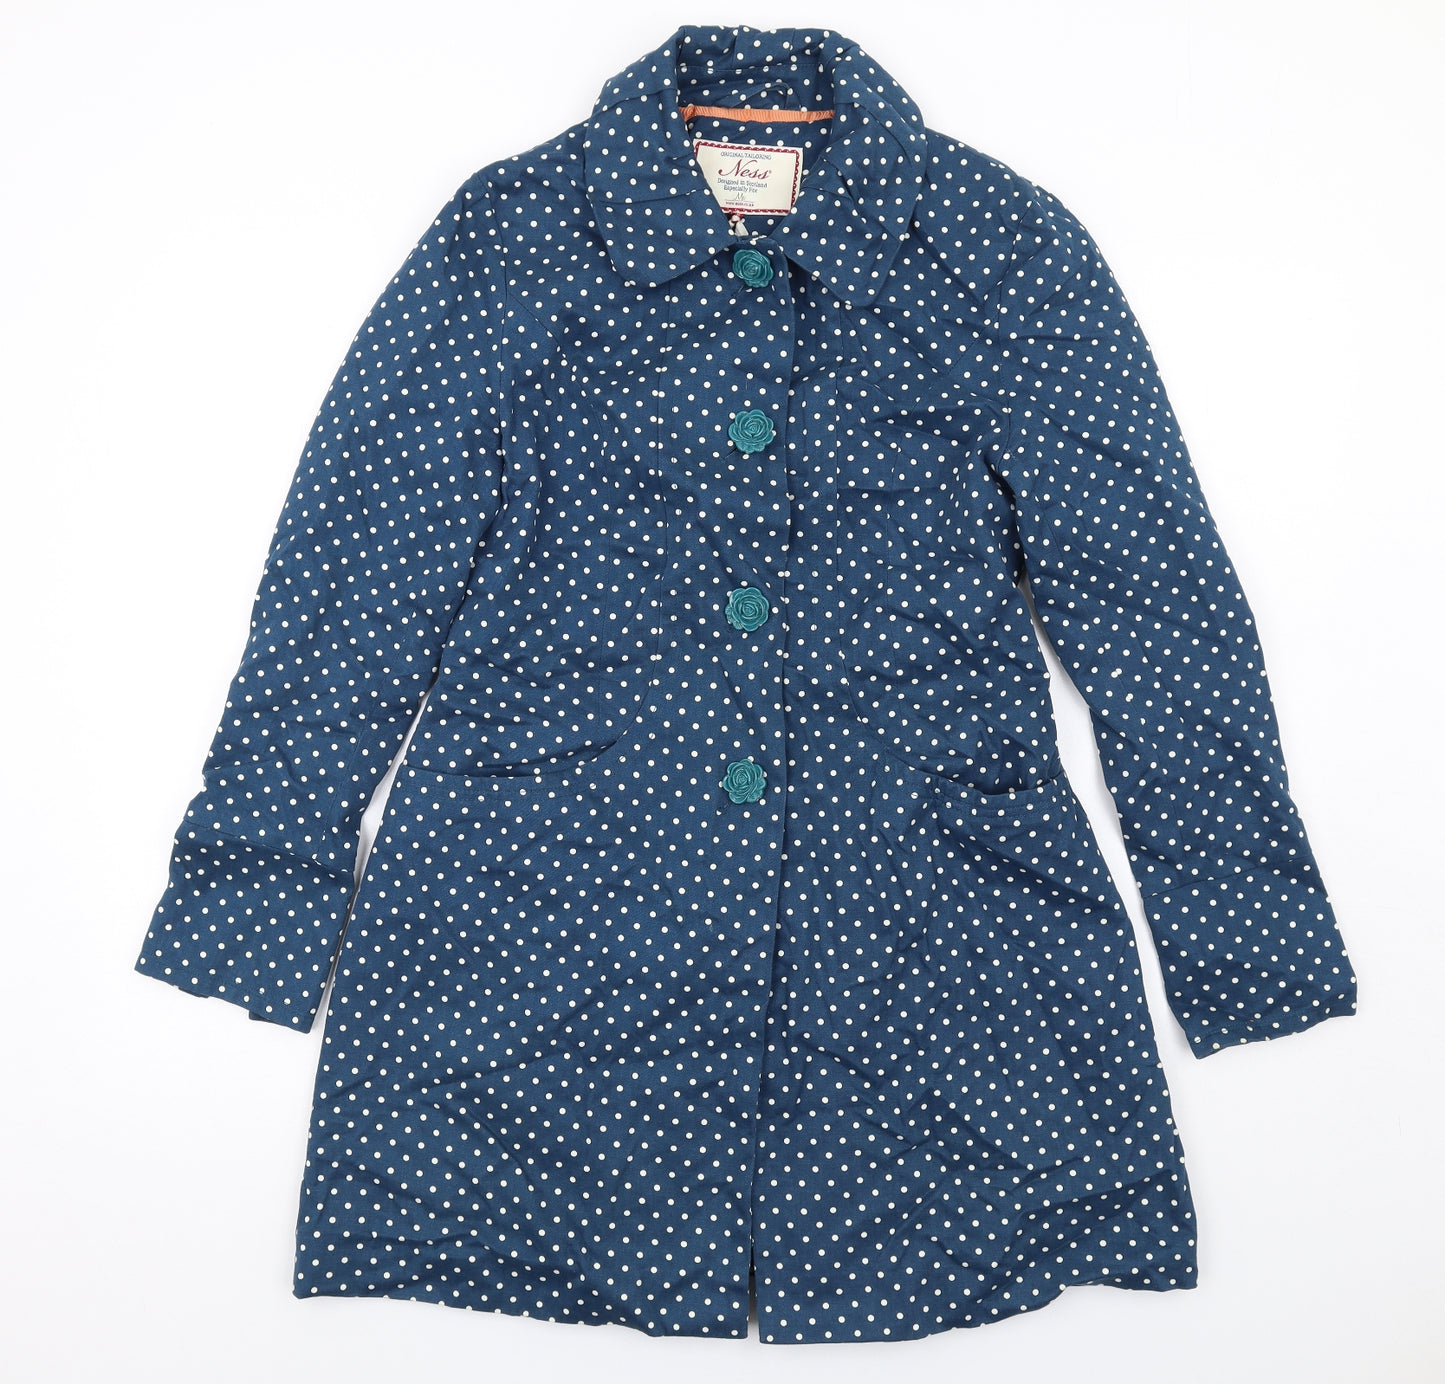 Ness Womens Blue Polka Dot Pea Coat Coat Size 10 Button